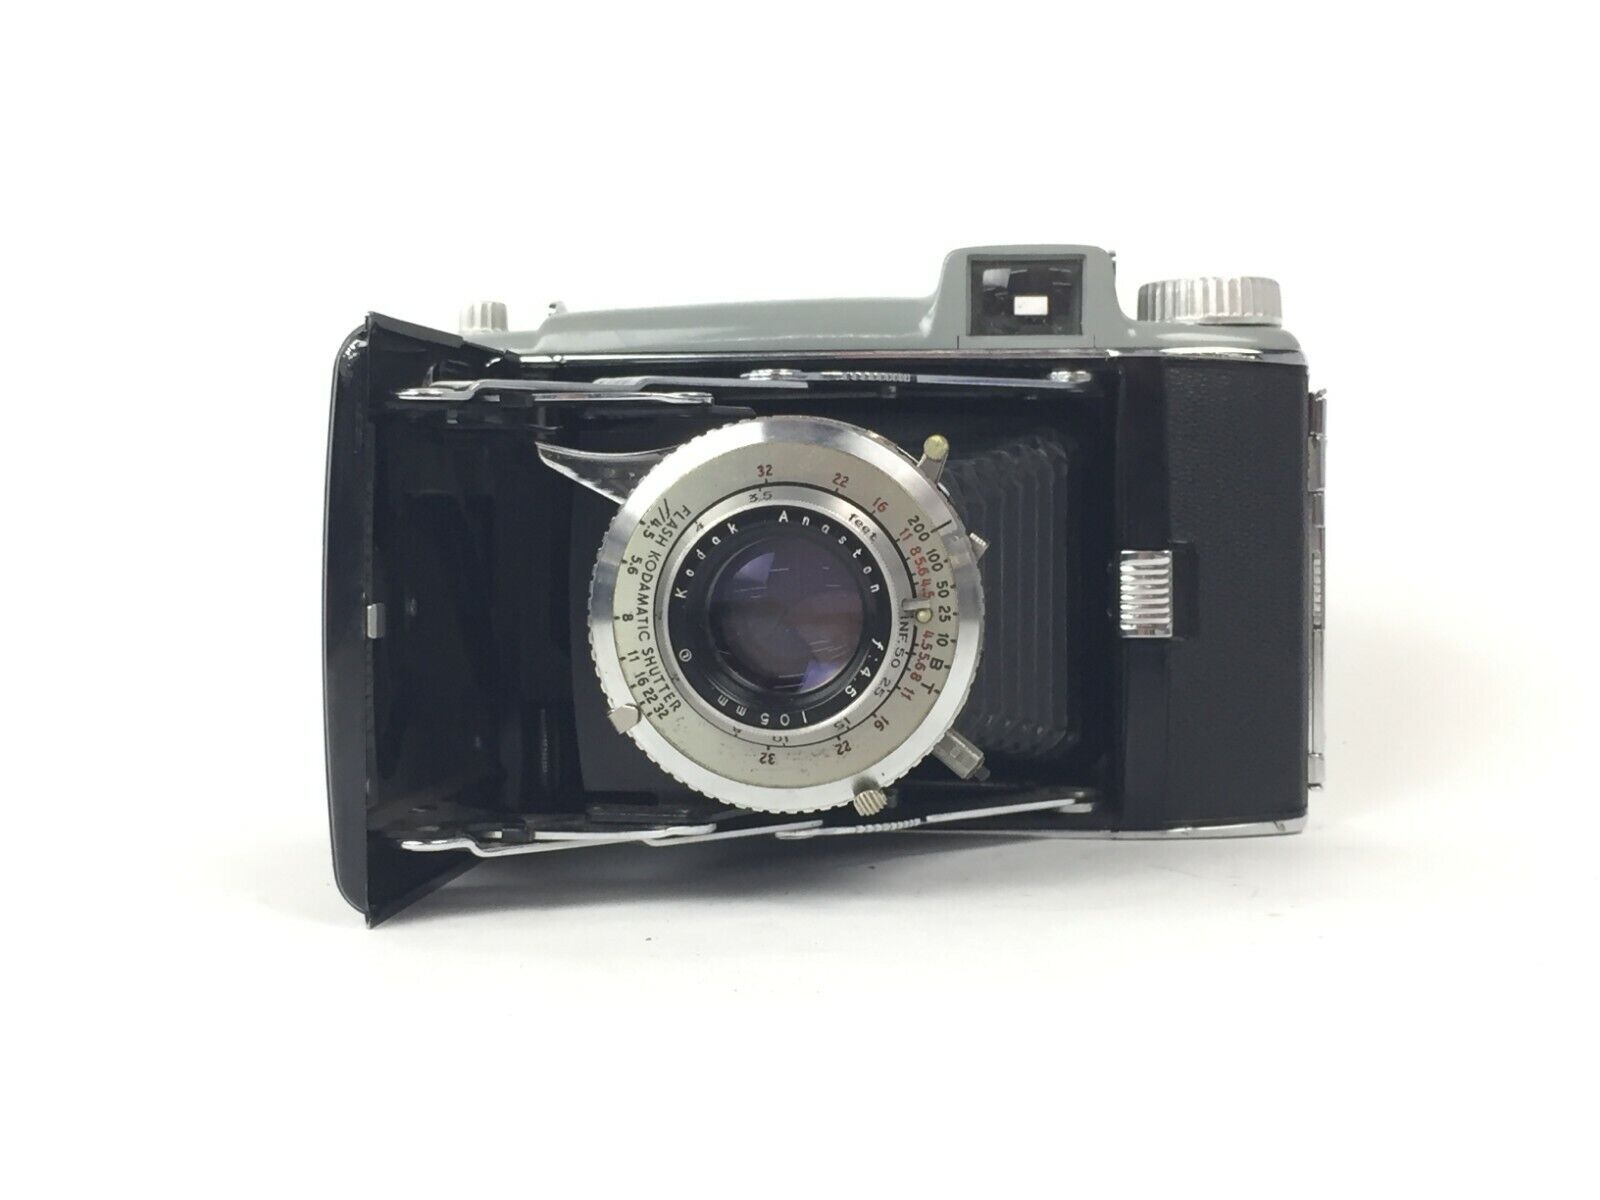 Kodak Super XX Verichrome Plus X KodaColor Camera 1:4.5 105mm 620 FIlm